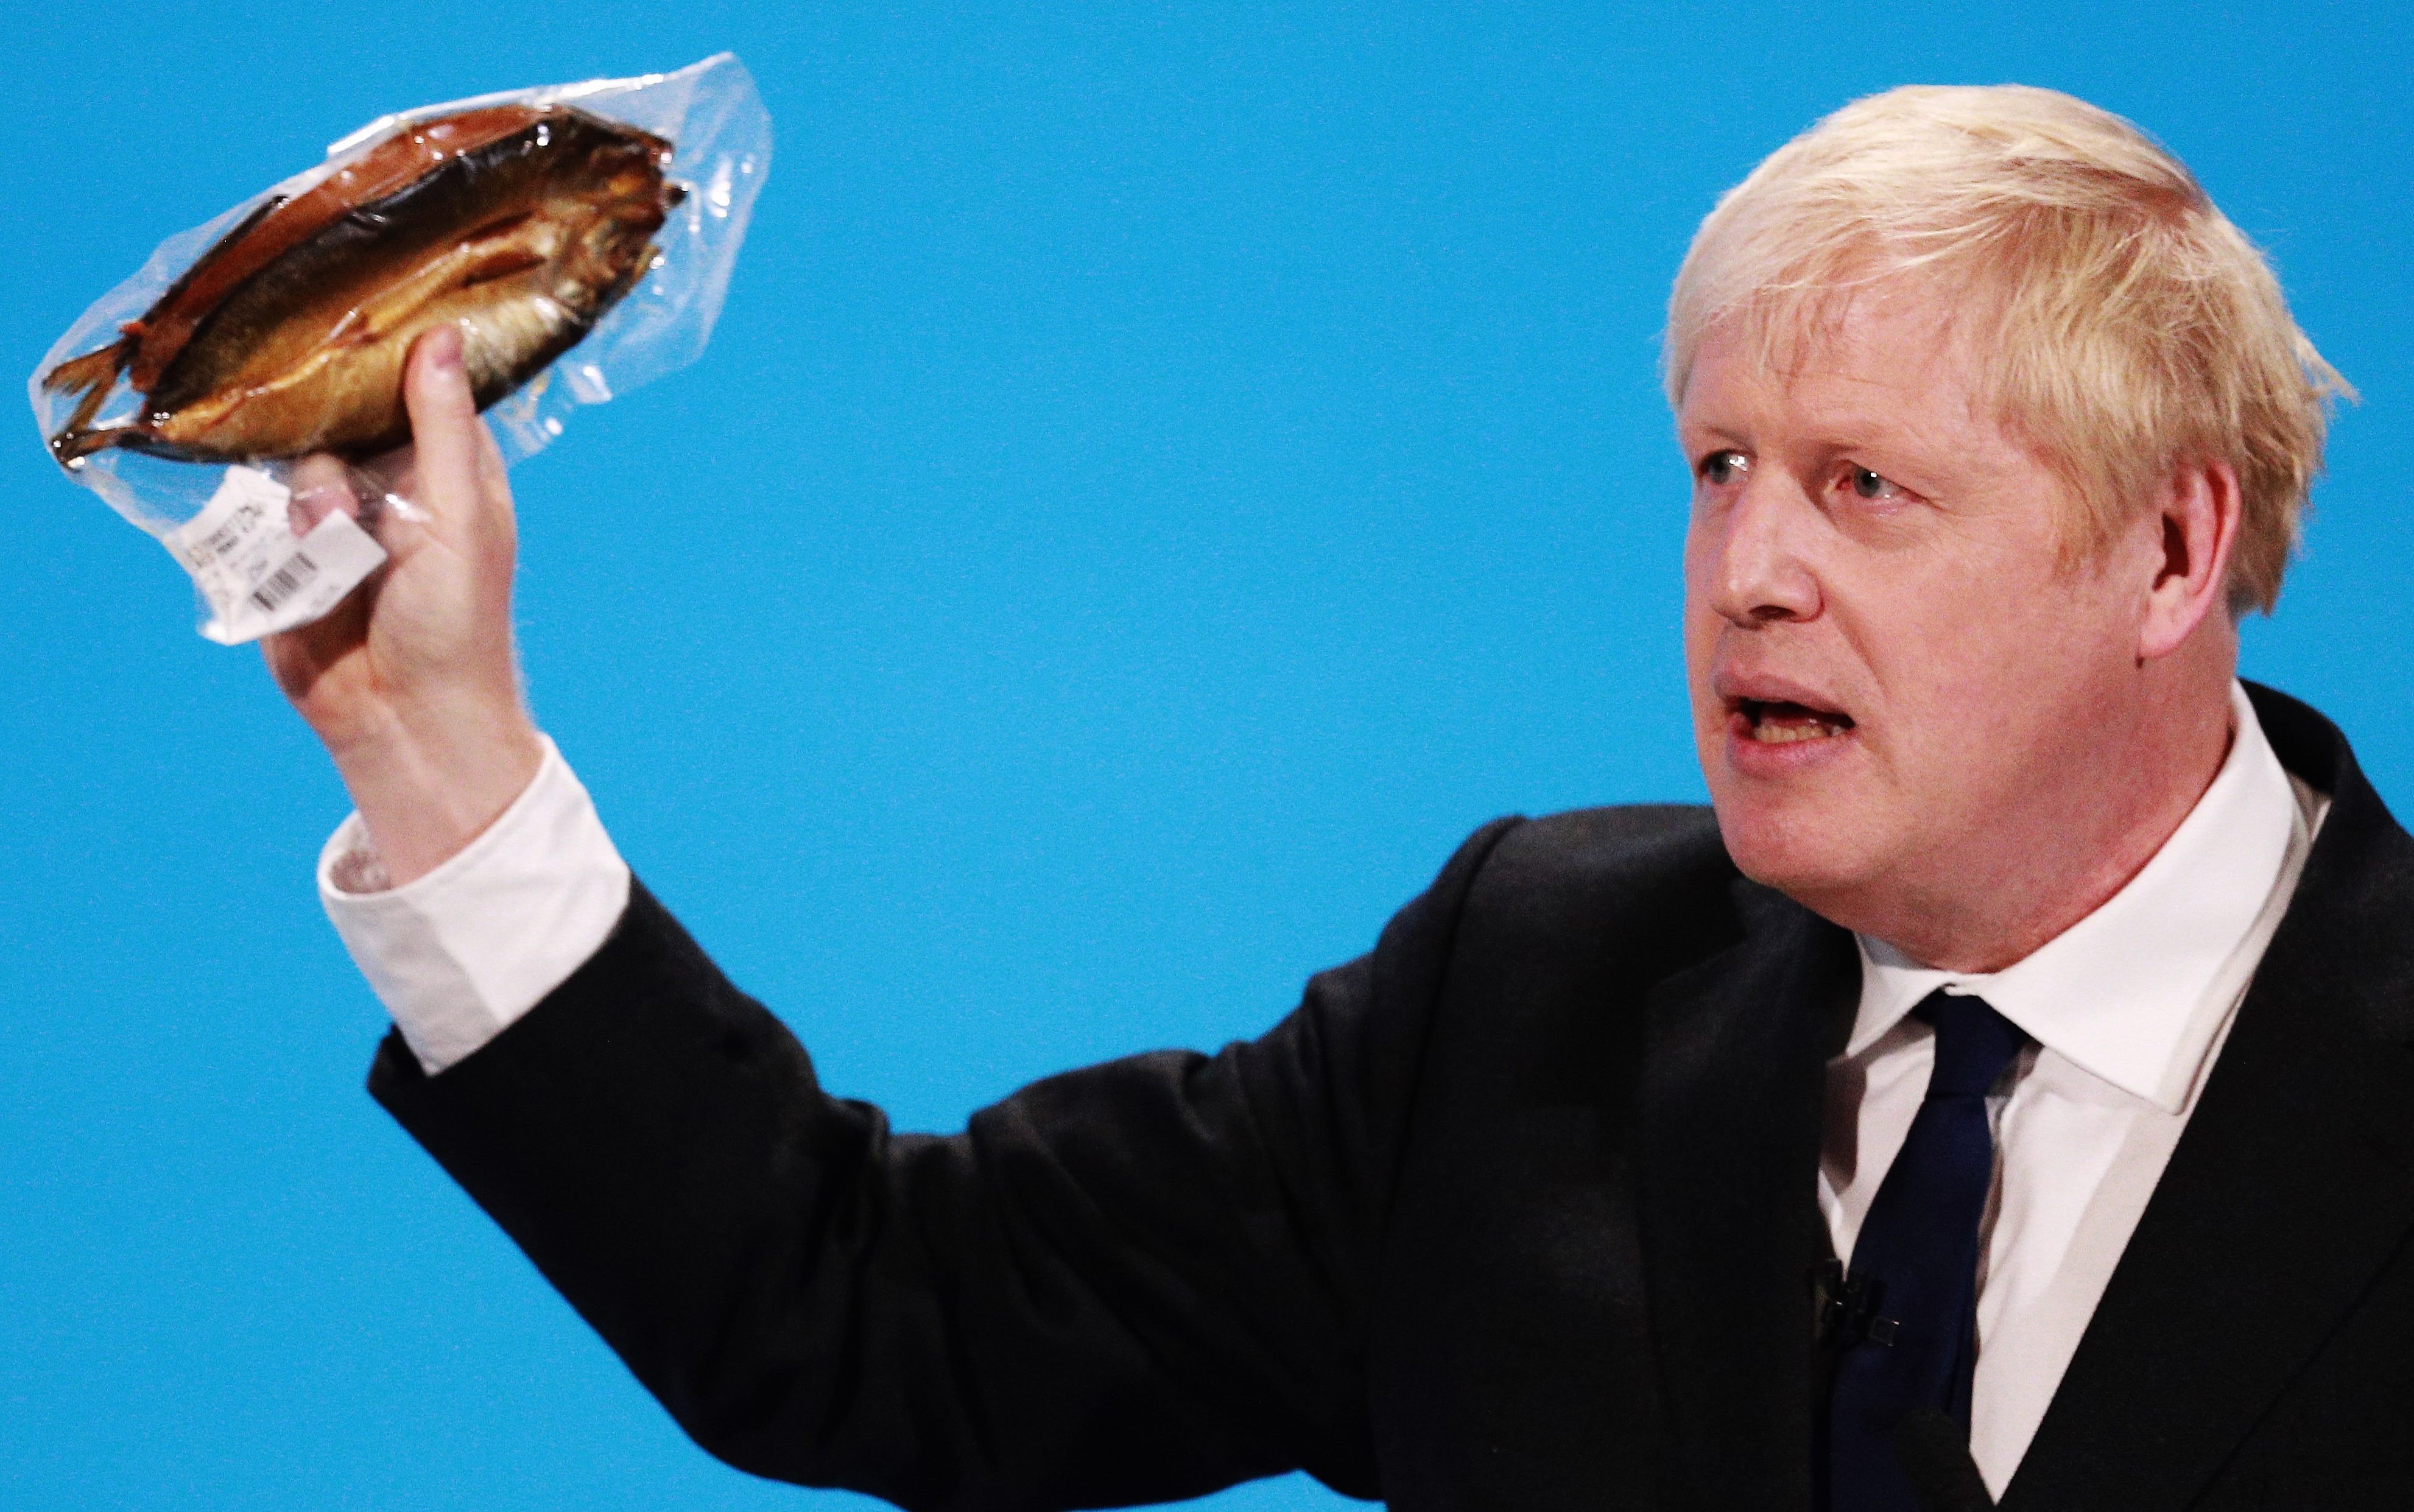 Boris Johnson wafts a kipper on stage as he blasts barmy EU food rules in final Tory leadership hustings, July 17, 2019.